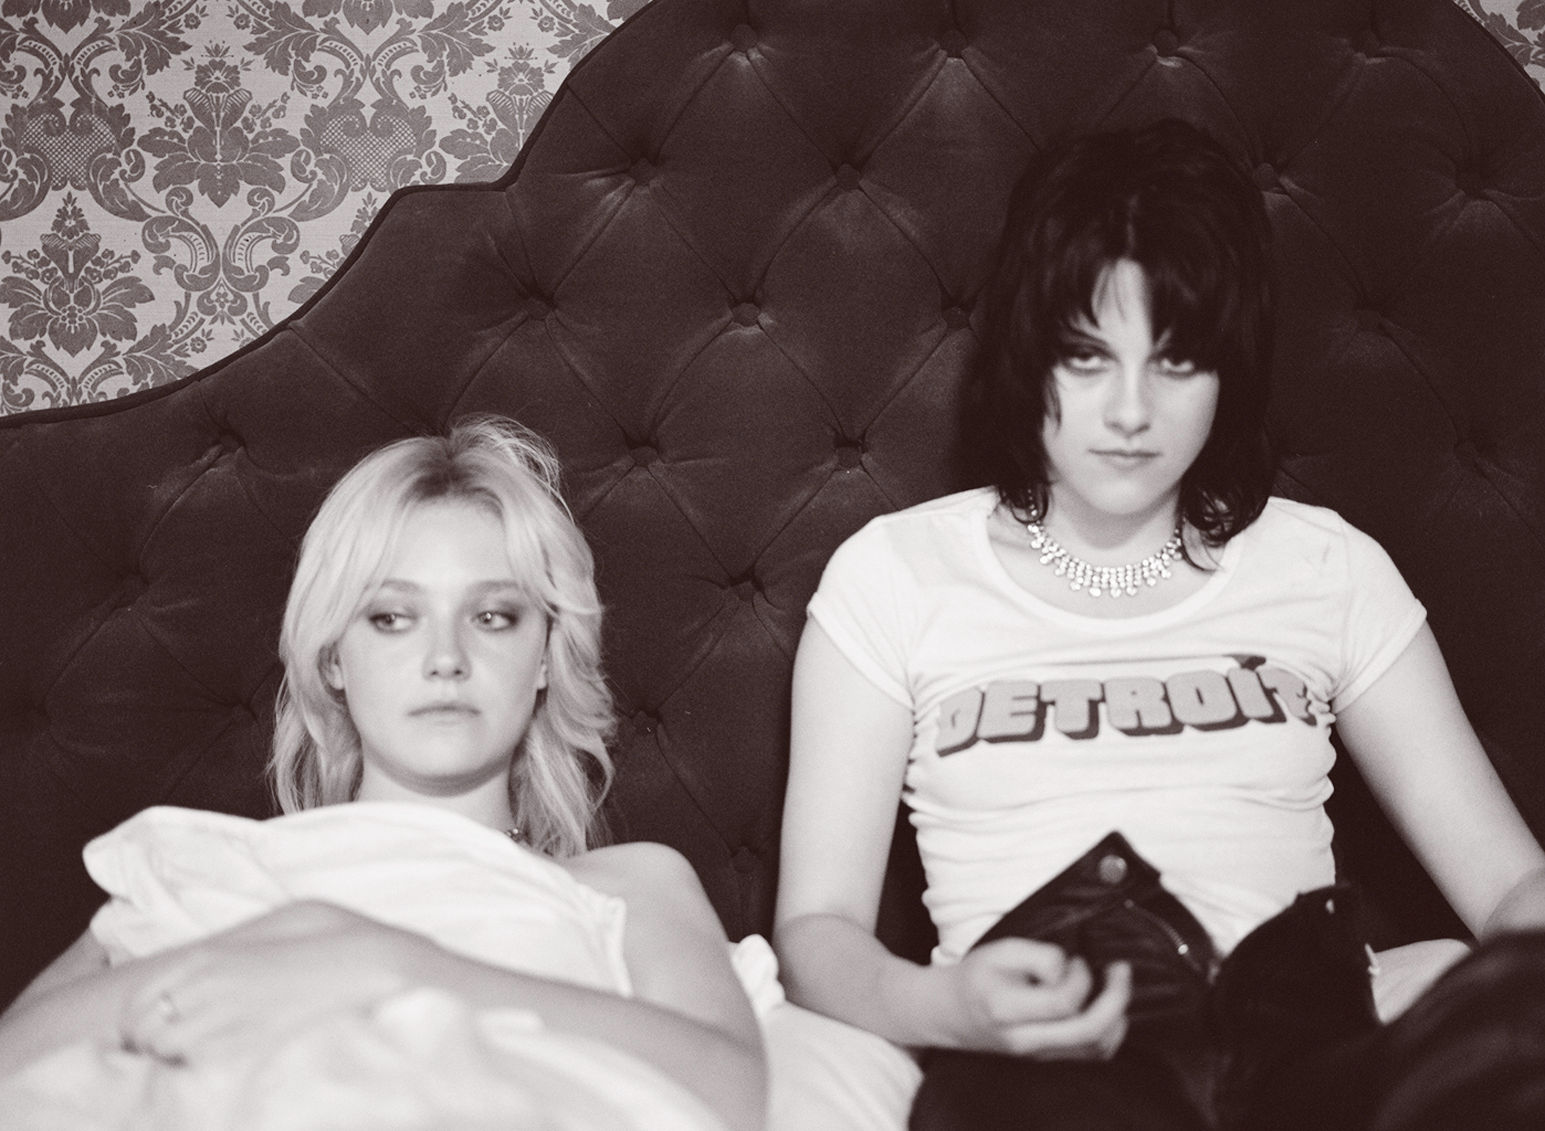 Dakota Fanning stars as Cherie Currie and Kristen Stewart stars as Joan Jett in Apparition's The Runaways (2010)